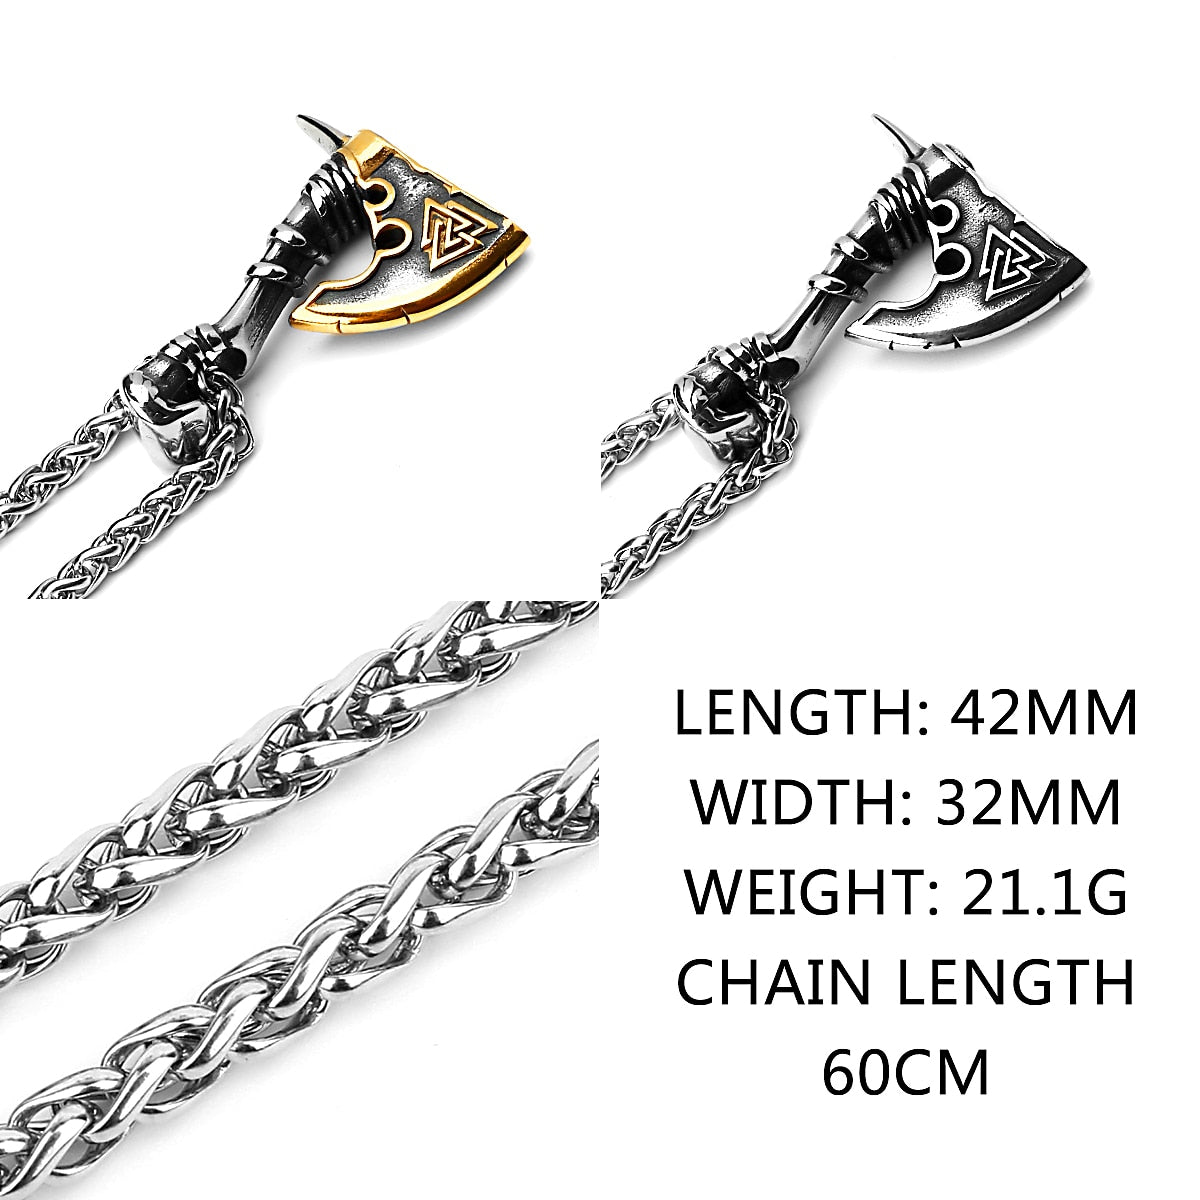 Viking Axe Necklace Pendant Valknut Stainless Steel Viking Men's Valknut Boyfriend Gift Jewelry Factory